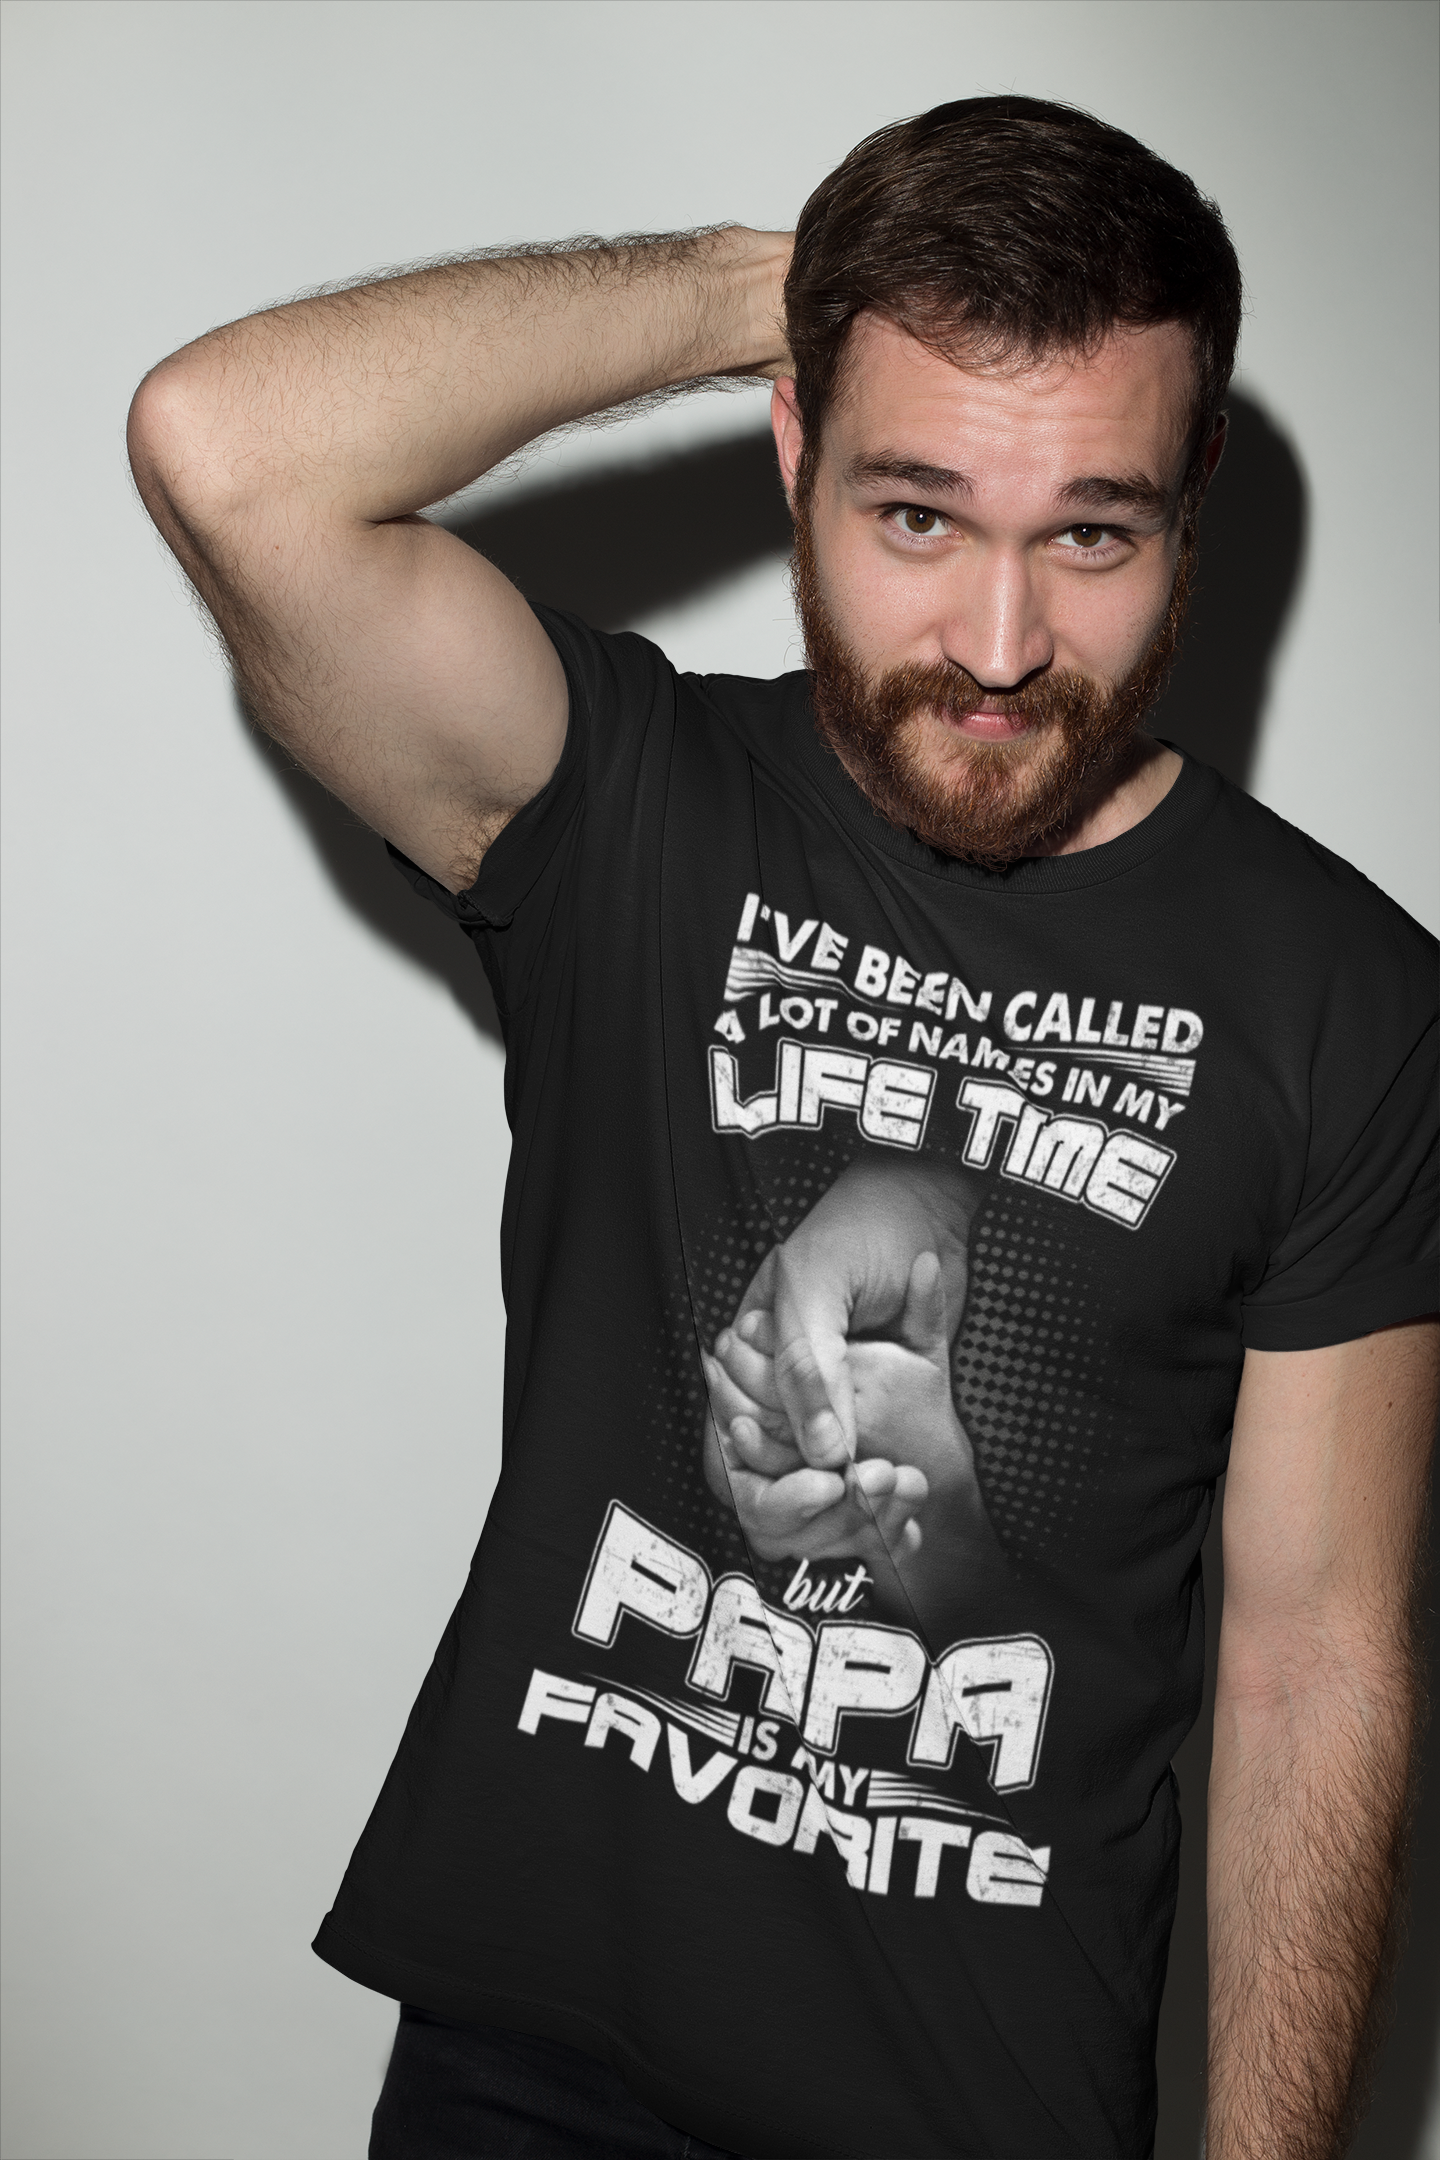 ULTRABASIC Men's Graphic T-Shirt Papa Is My Favorite - Baby Hand - Vintage Shirt